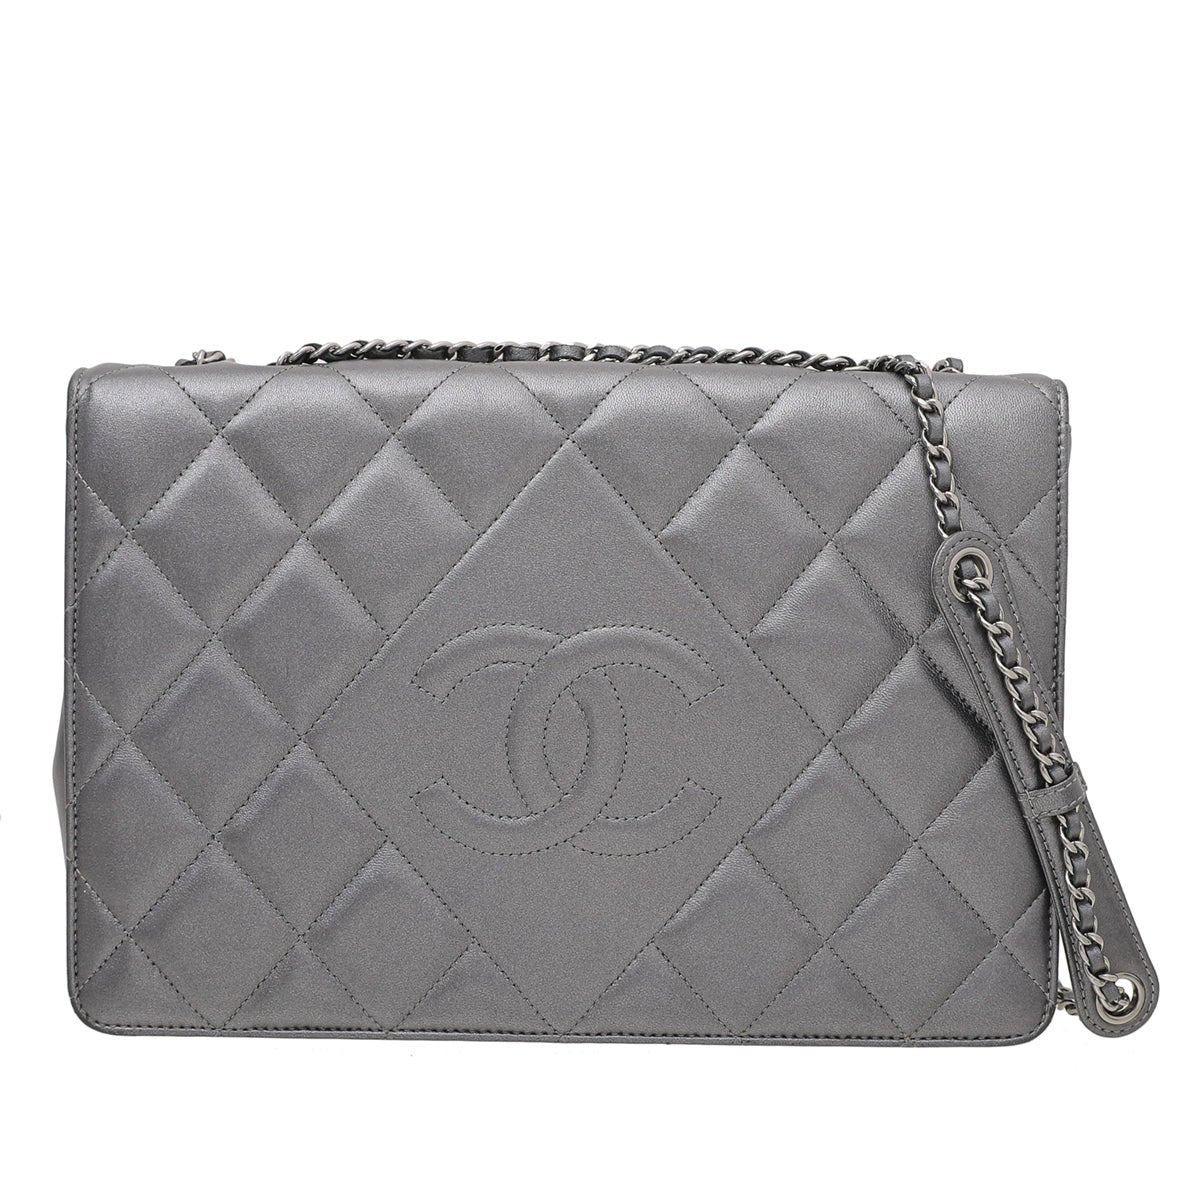 The Closet - Chanel Ash Gray CC Diamond Flap Bag | The Closet